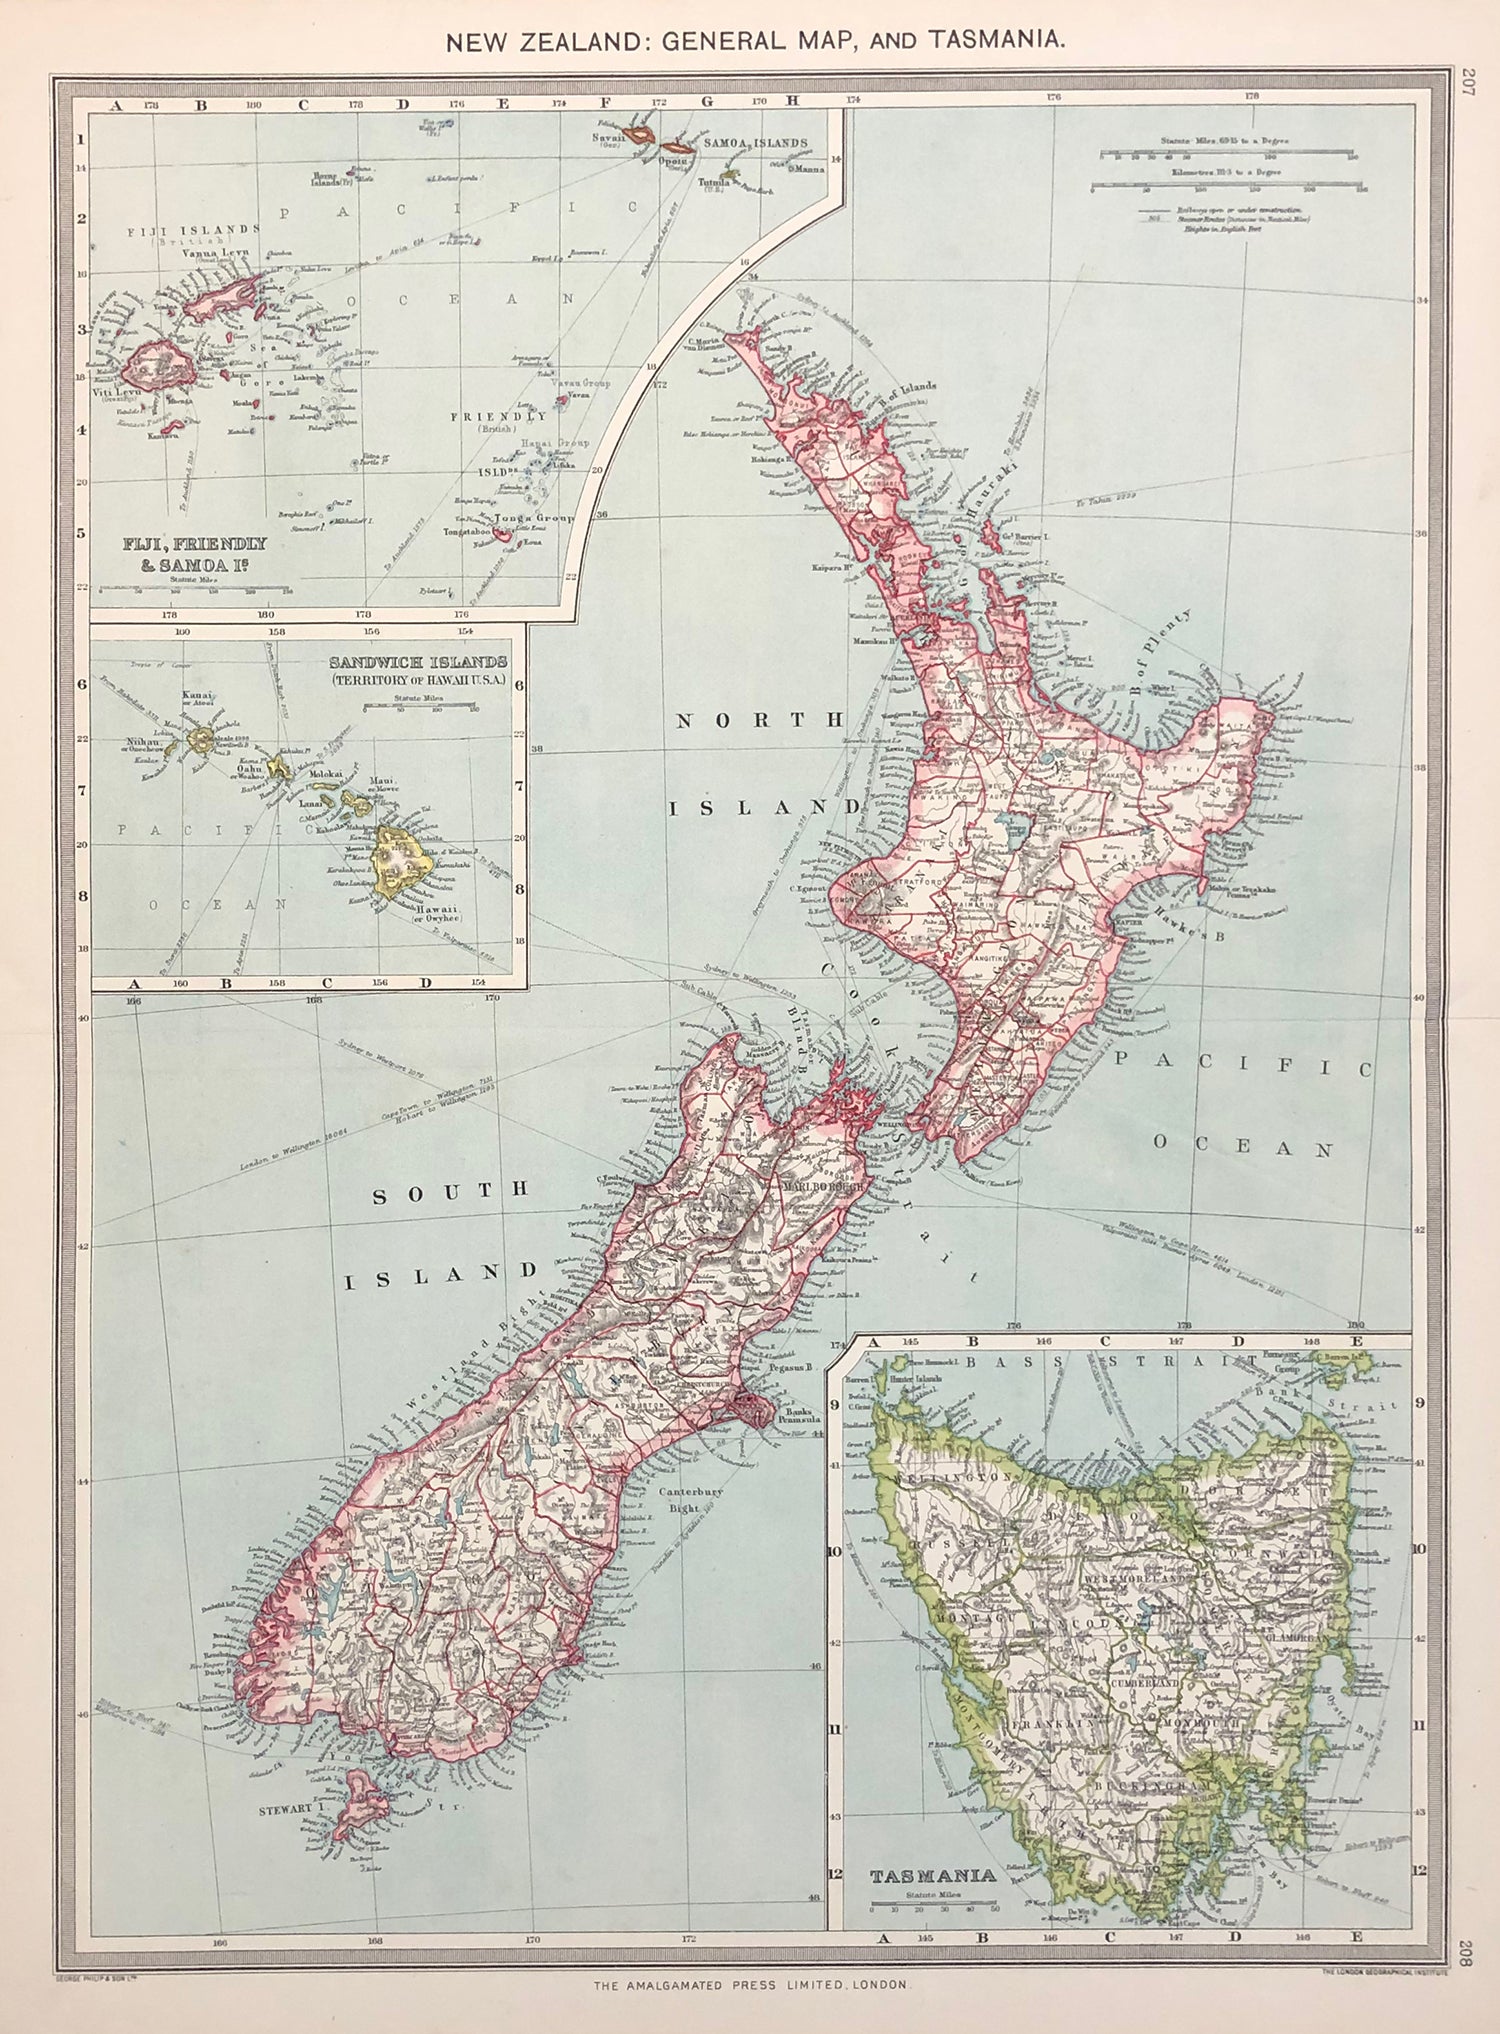 NEW ZEALAND: GENERAL MAP, AND TASMANIA